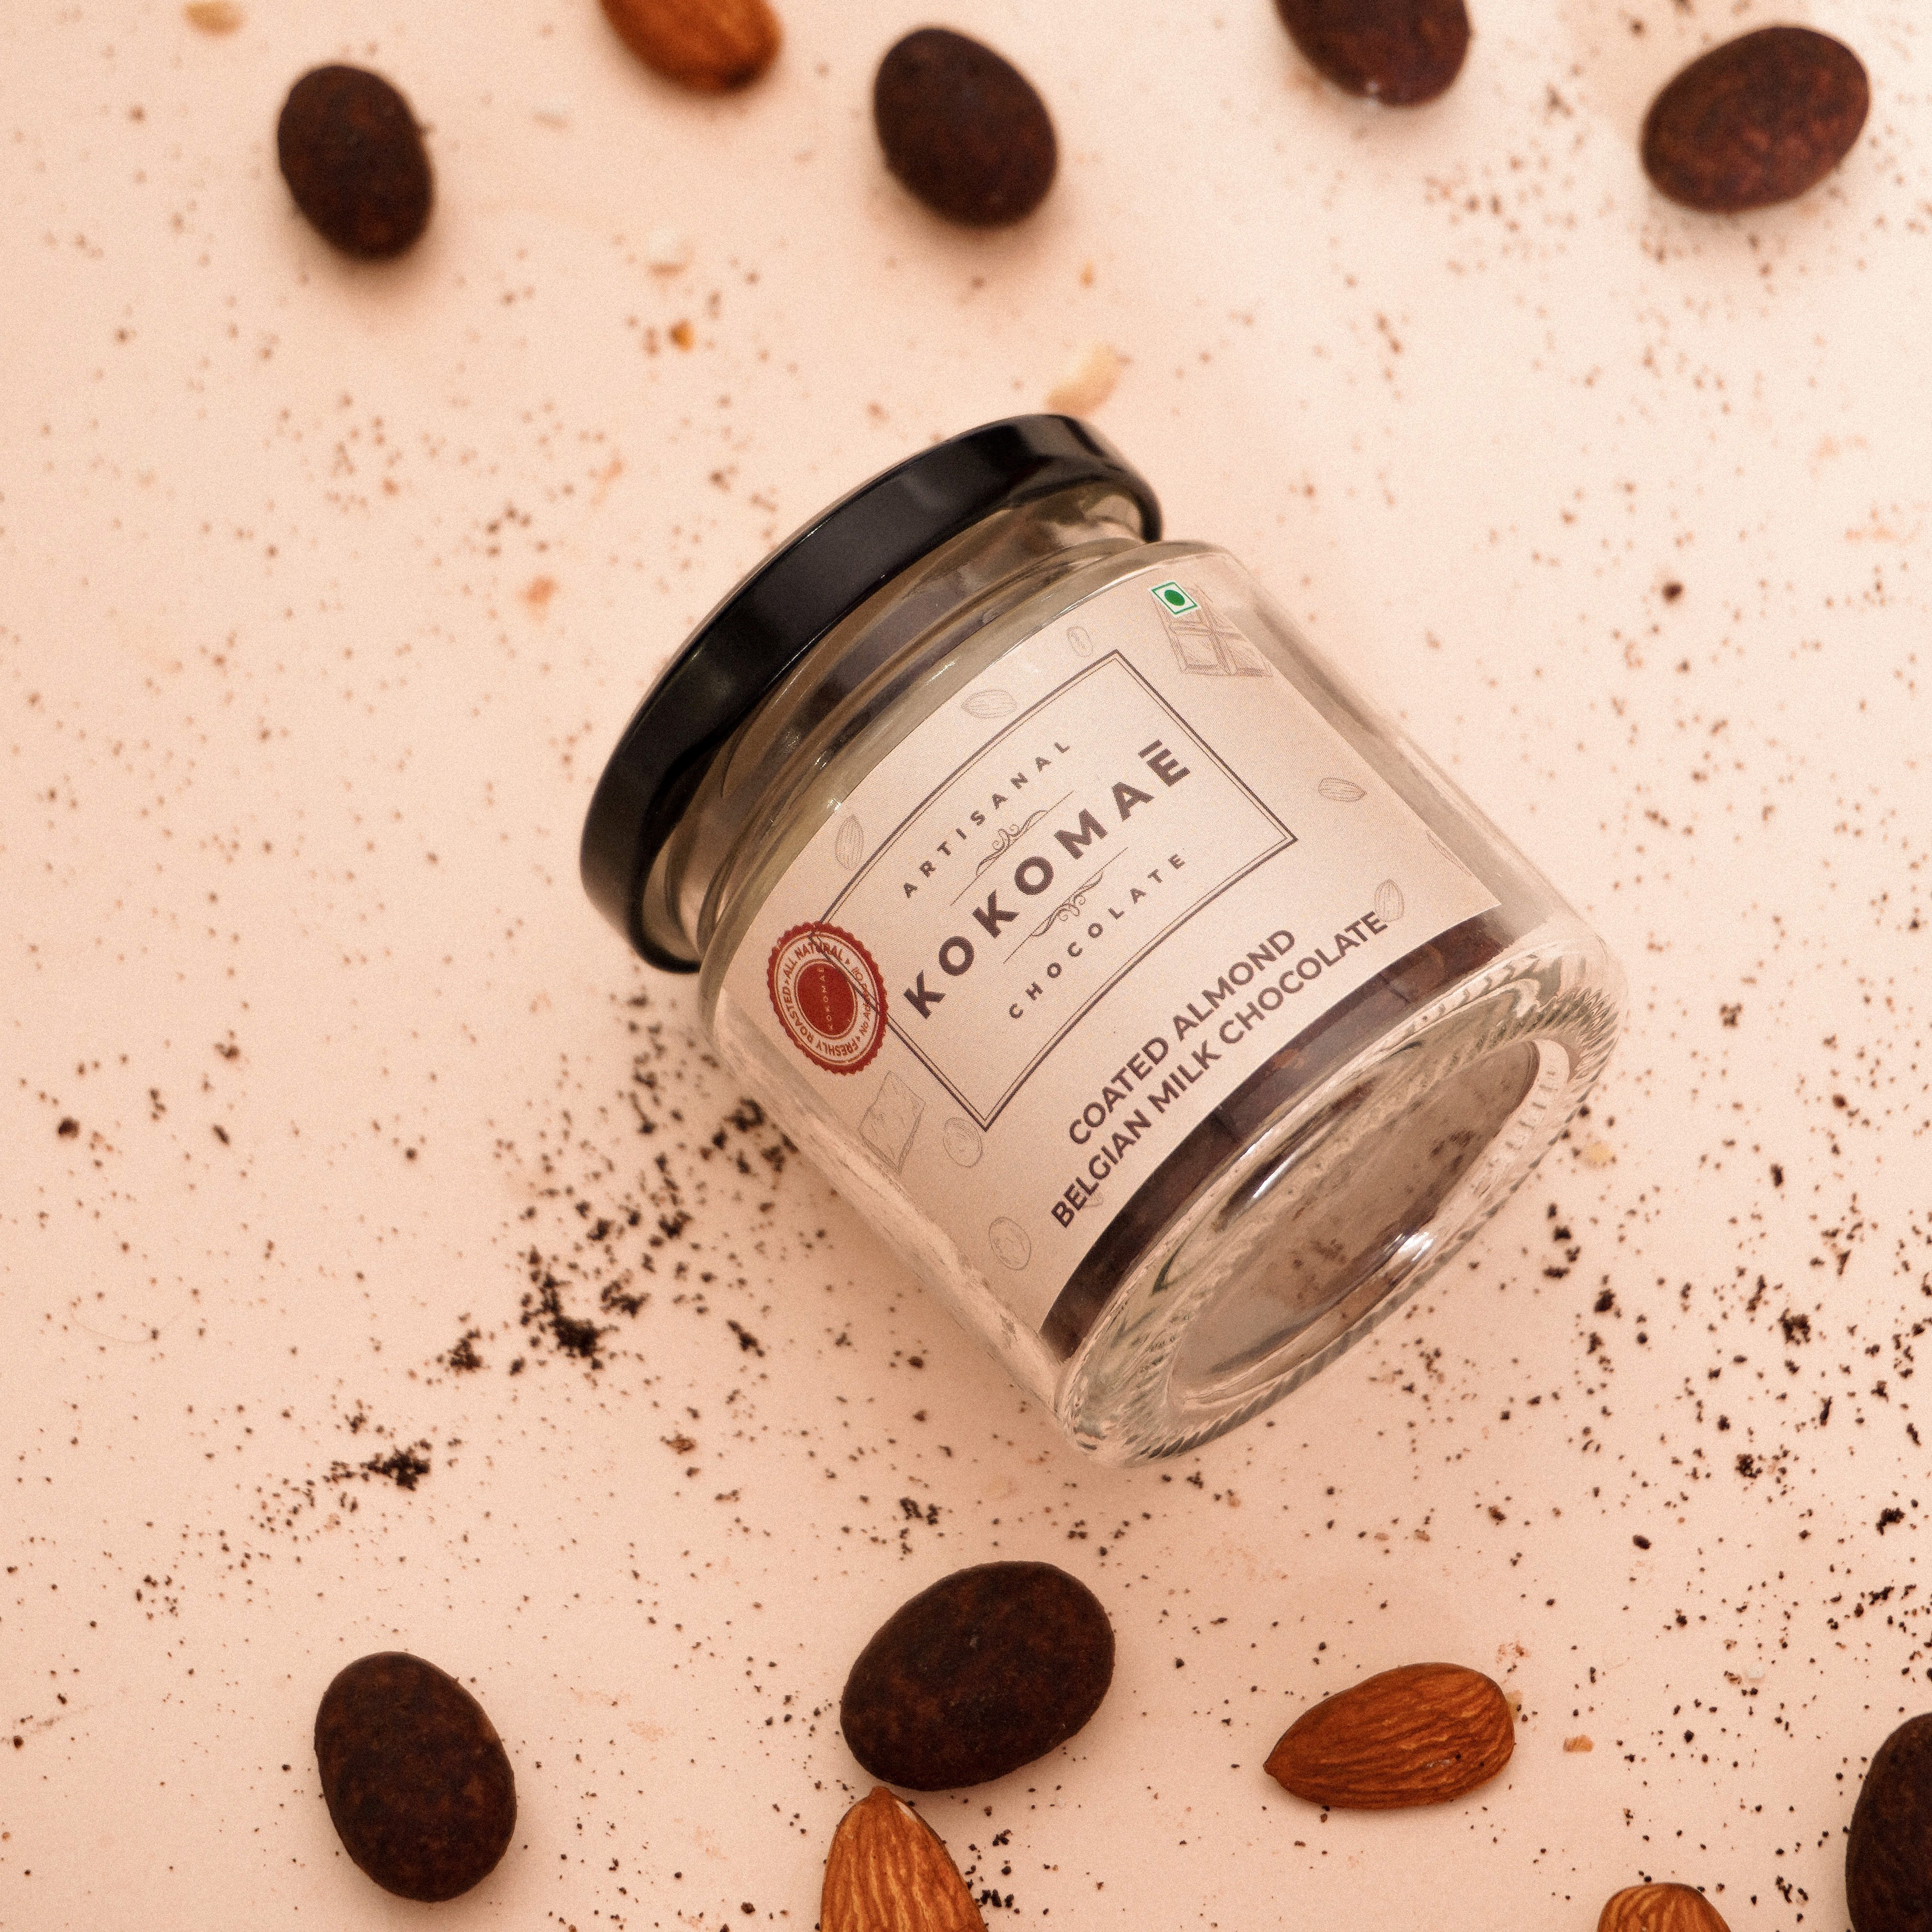 Kokomaē Almonds coated in Smooth Belgian Milk Chocolate